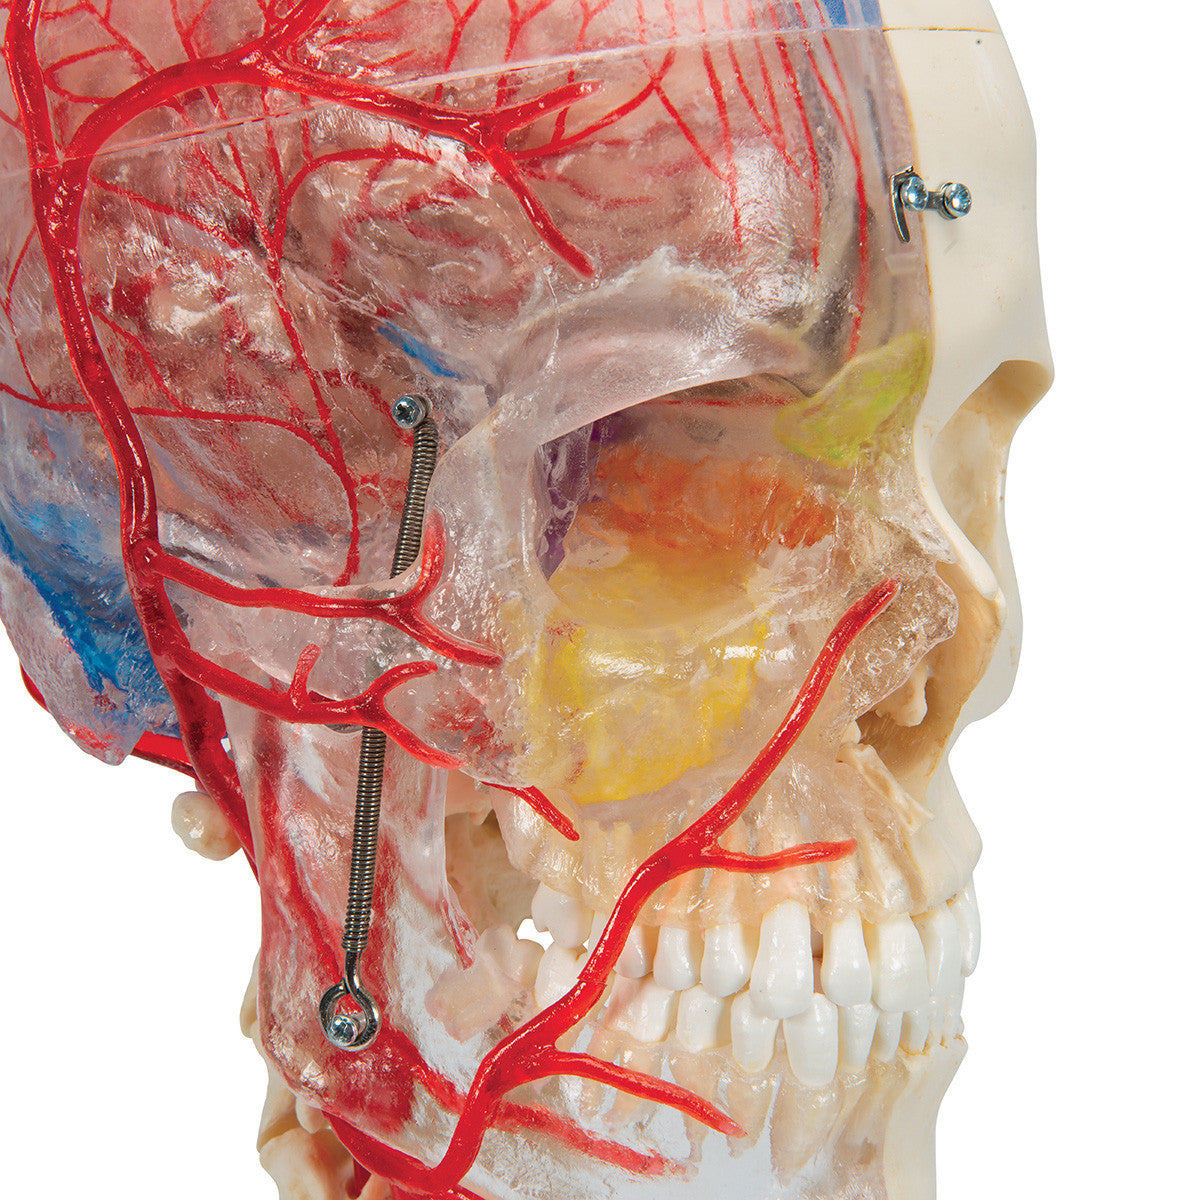 BONElike Human Skull Model, Half Transparent & Half Bony- Complete with Brain and Vertebrae | 3B Scientific A283